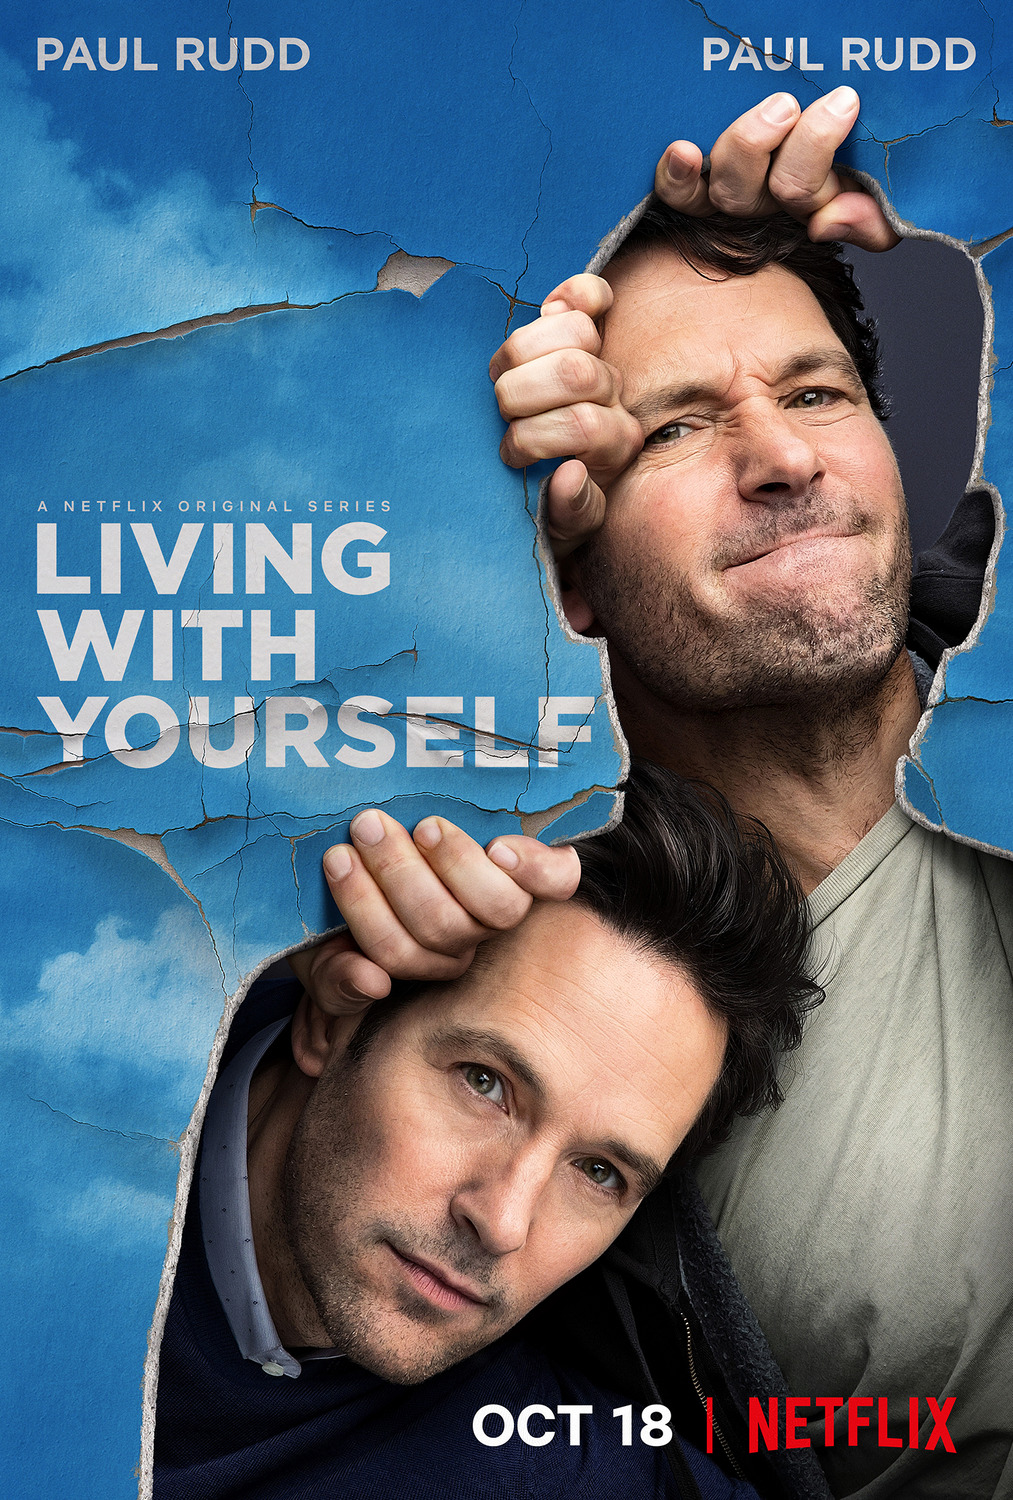 Netflix’s Living With Yourself review: Paul Rudd > Paul Rudd